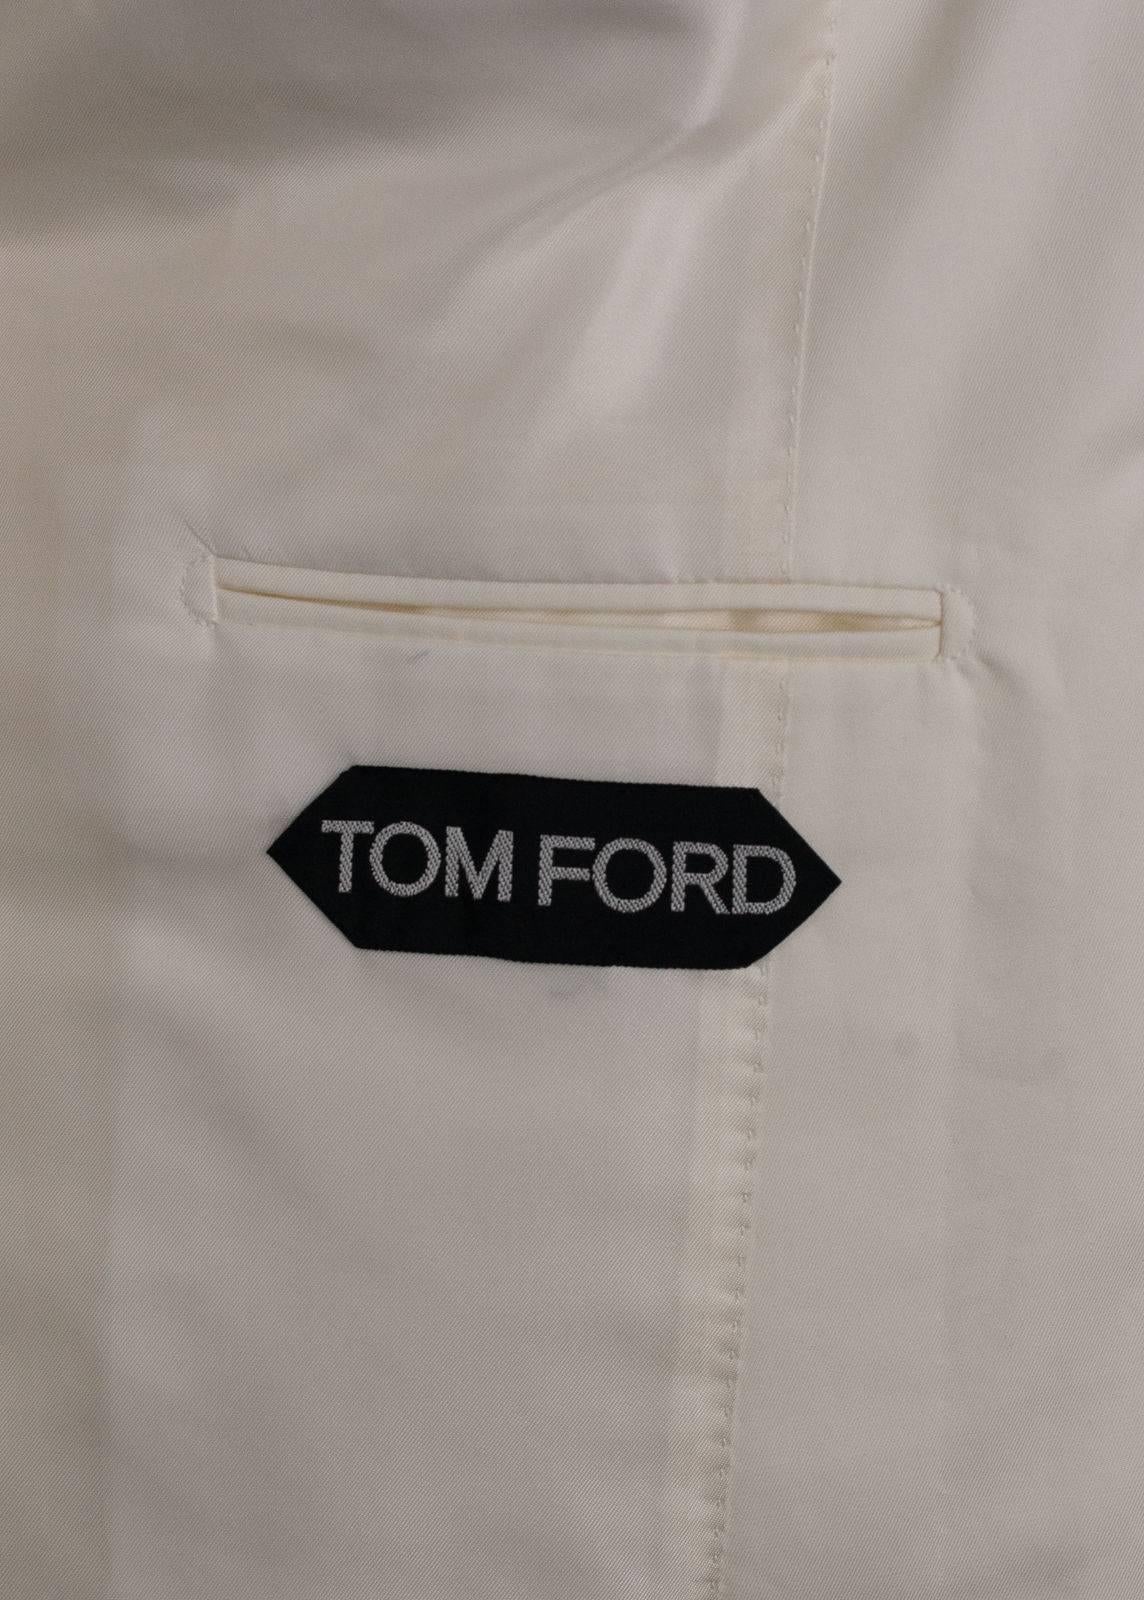 tom ford shelton suit